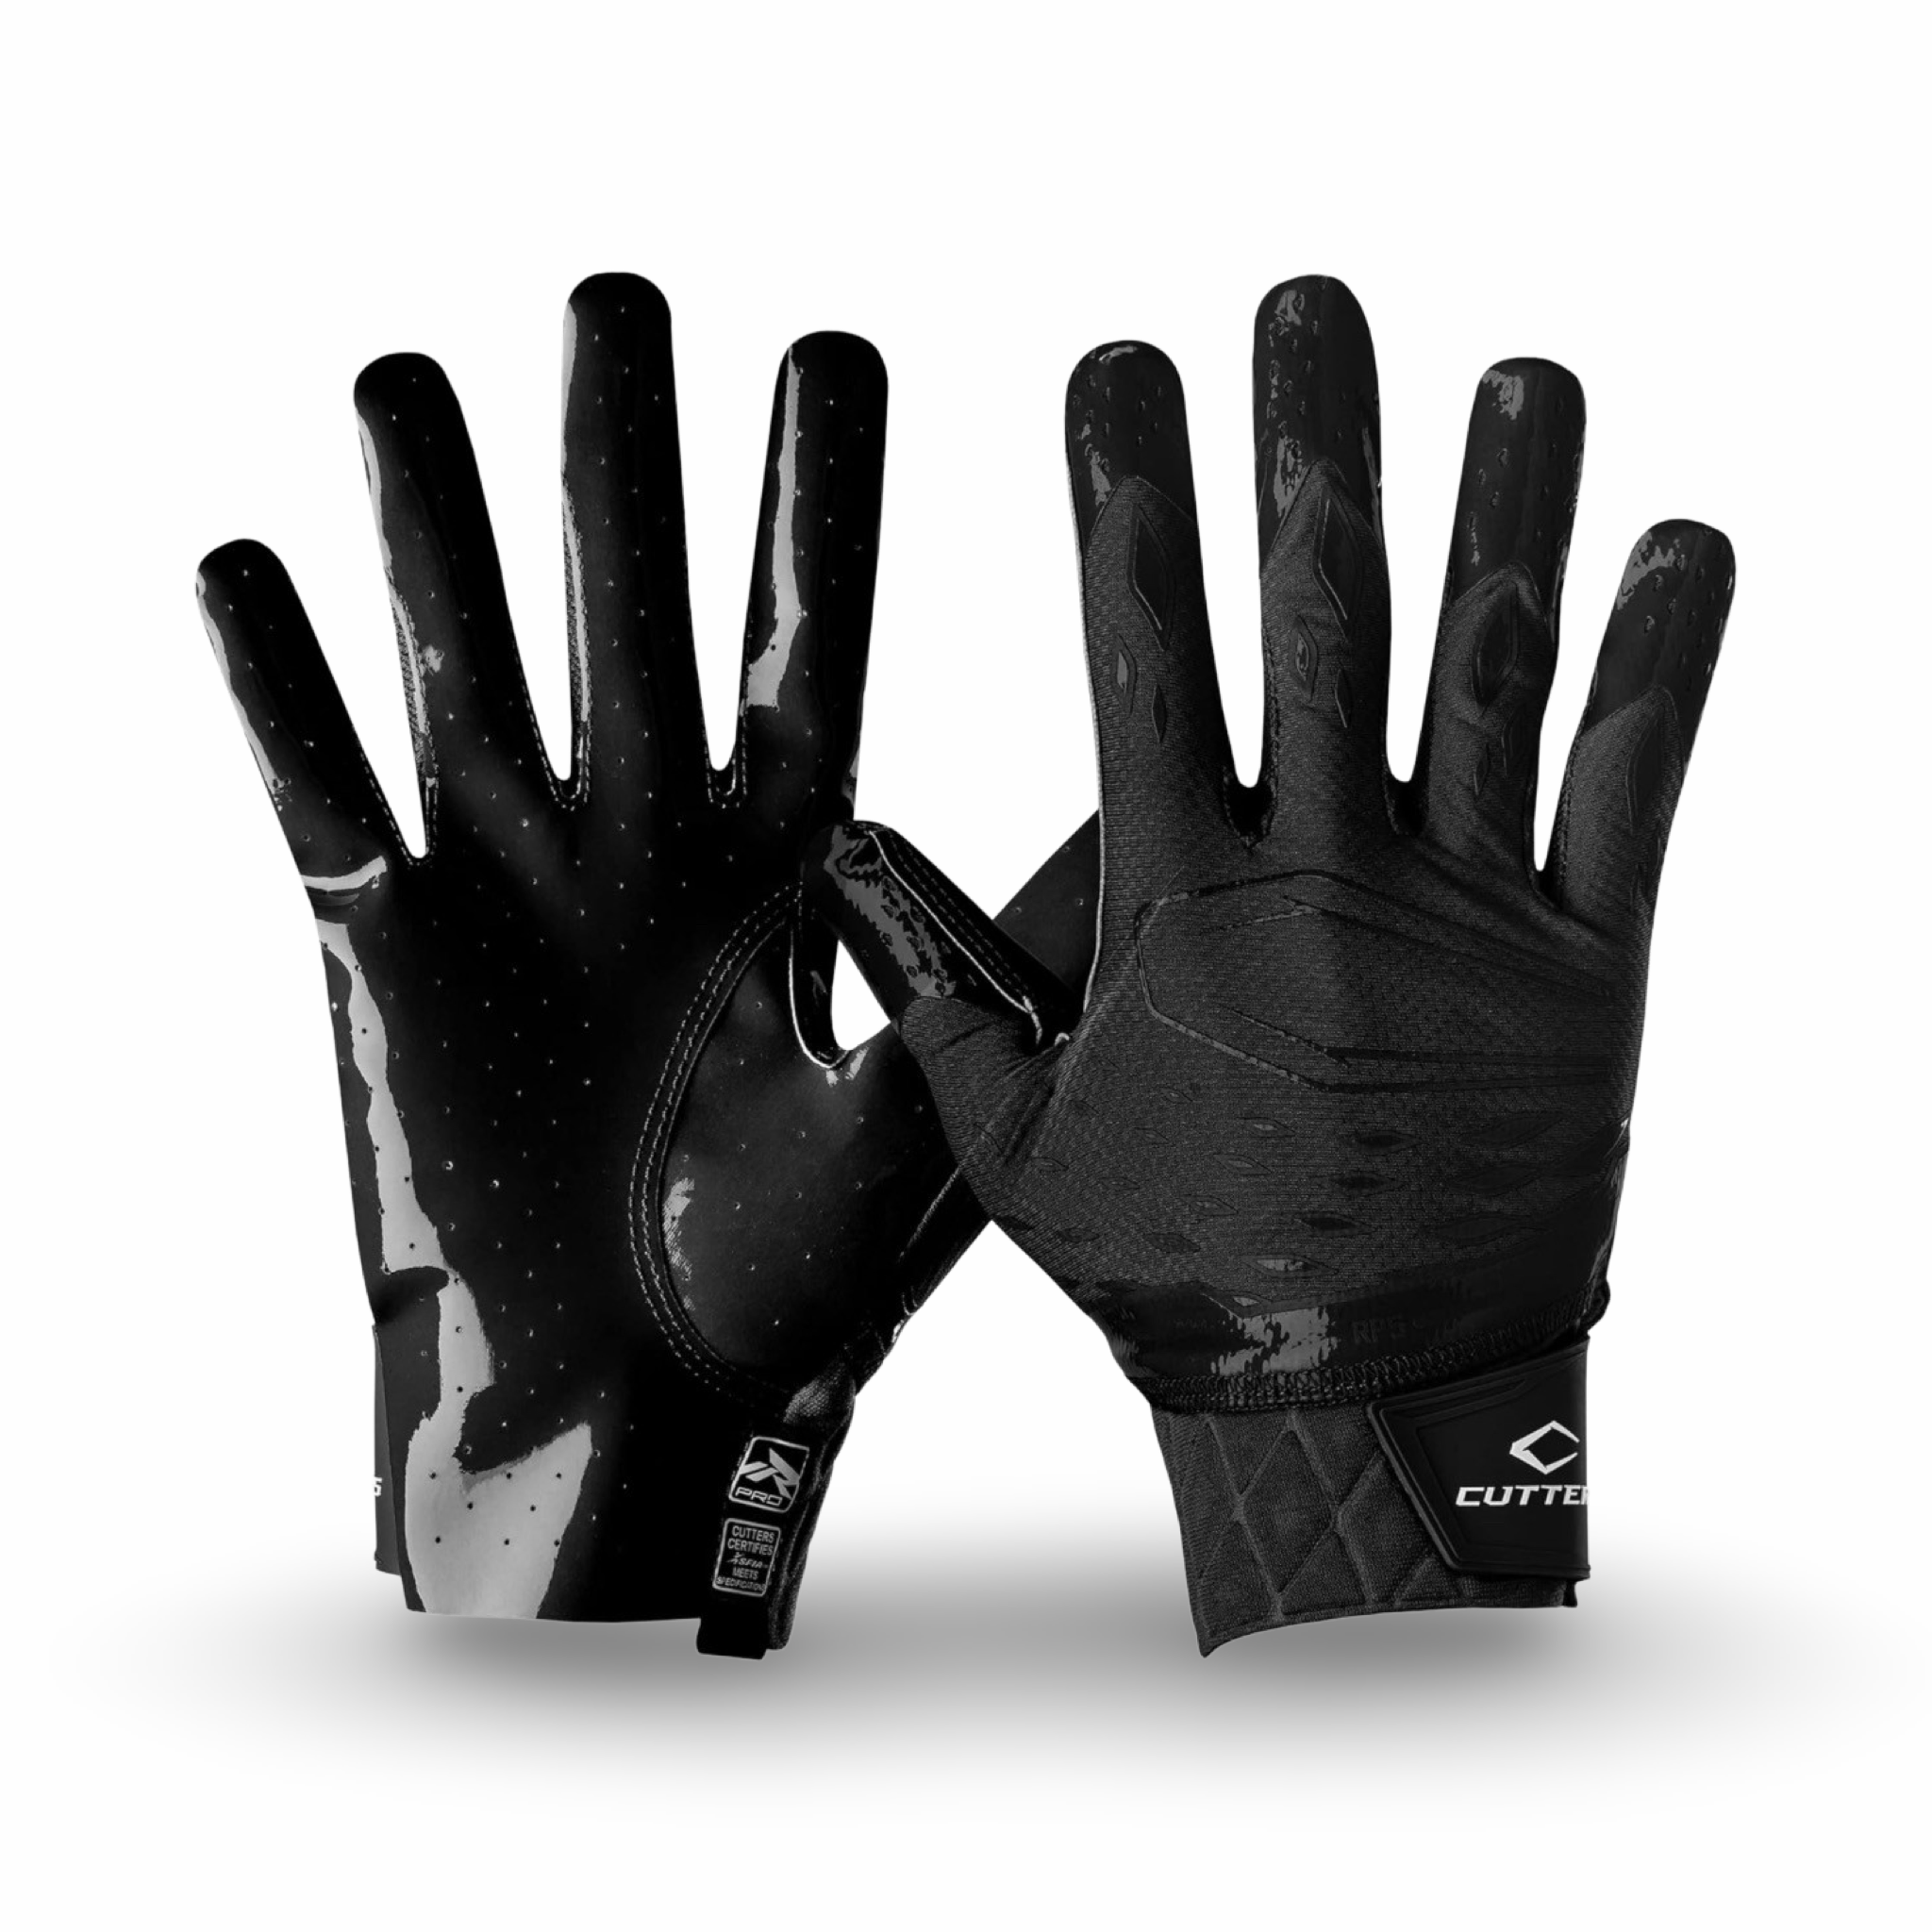 Cutters Men’s Rev Pro 5.0 Receiver Football Gloves